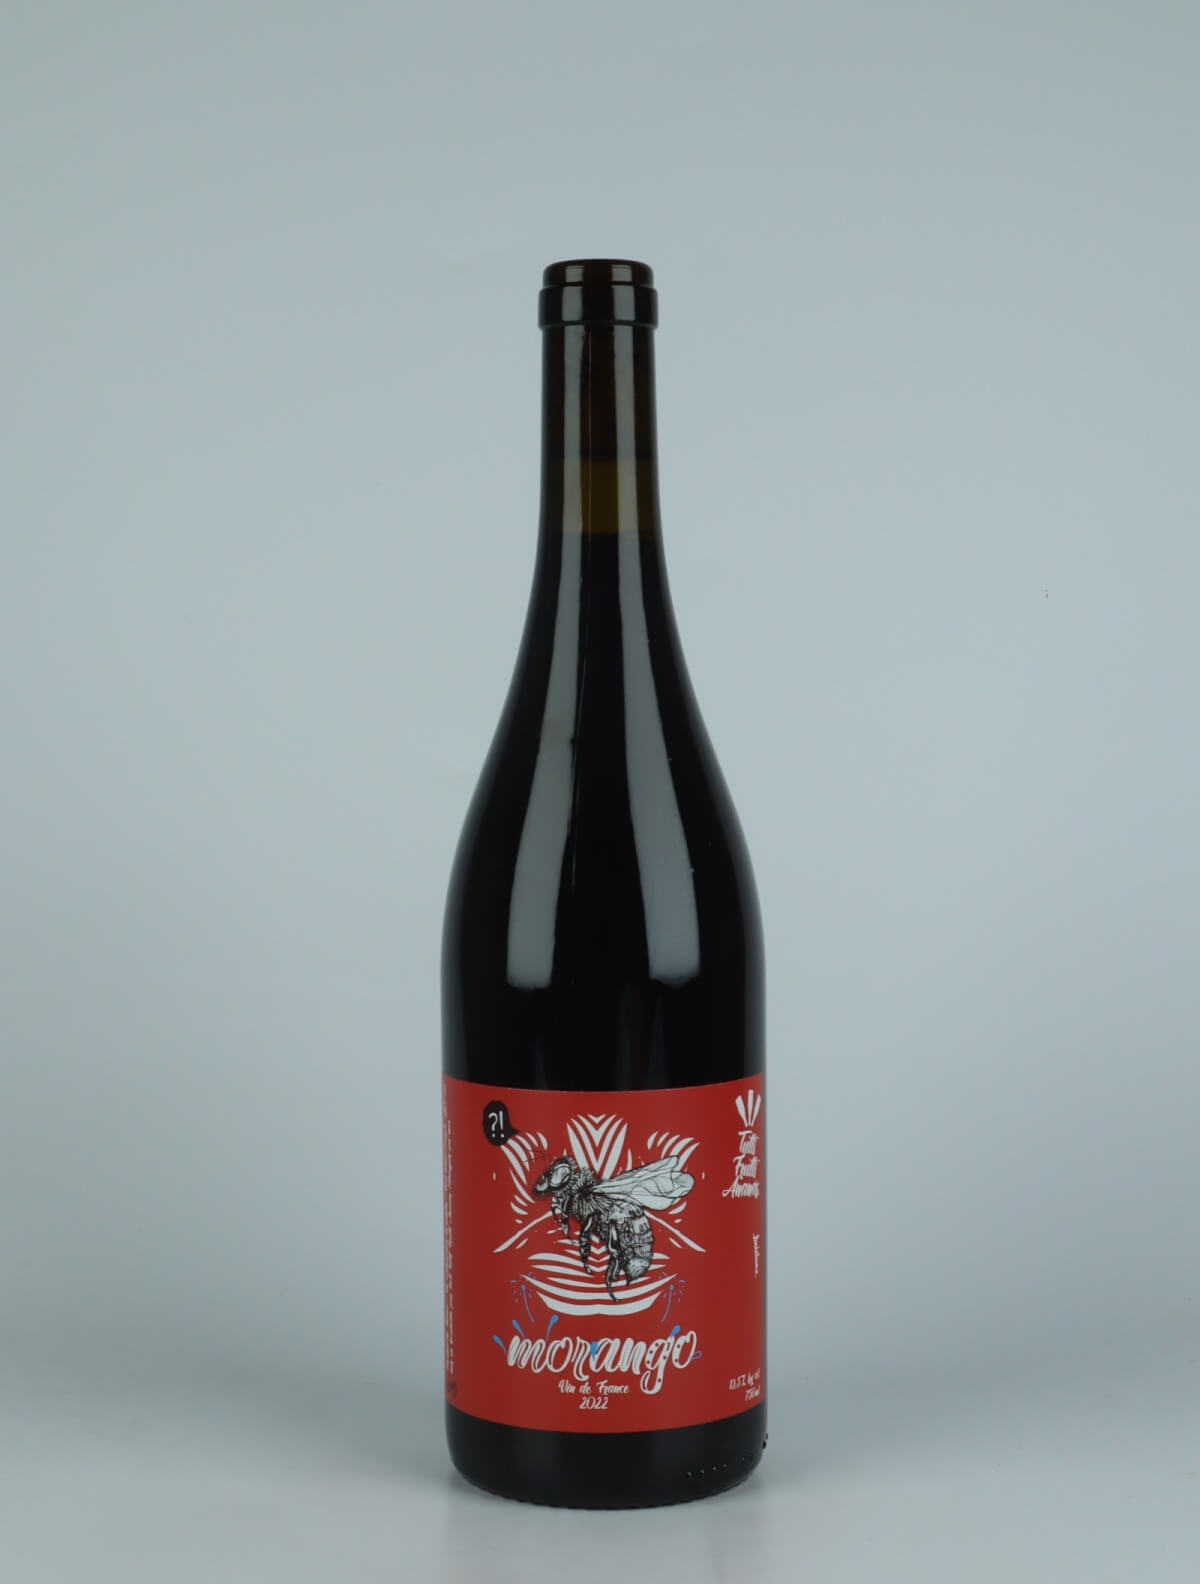 A bottle 2022 Morango Red wine from Tutti Frutti Ananas, Rousillon in France